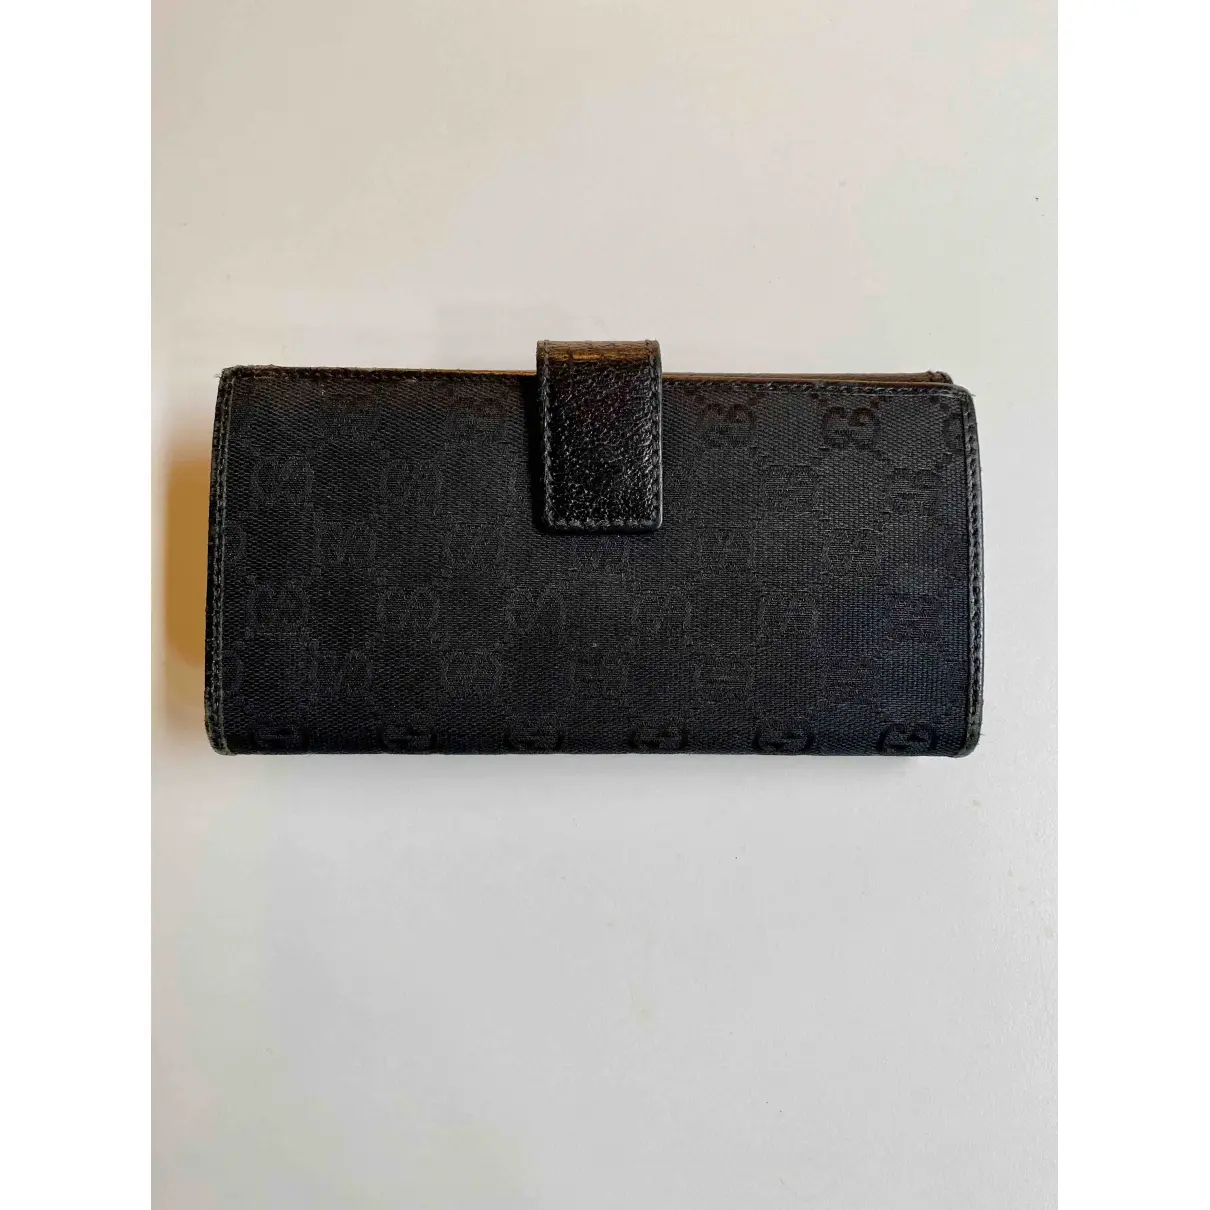 Buy Gucci Leather wallet online - Vintage